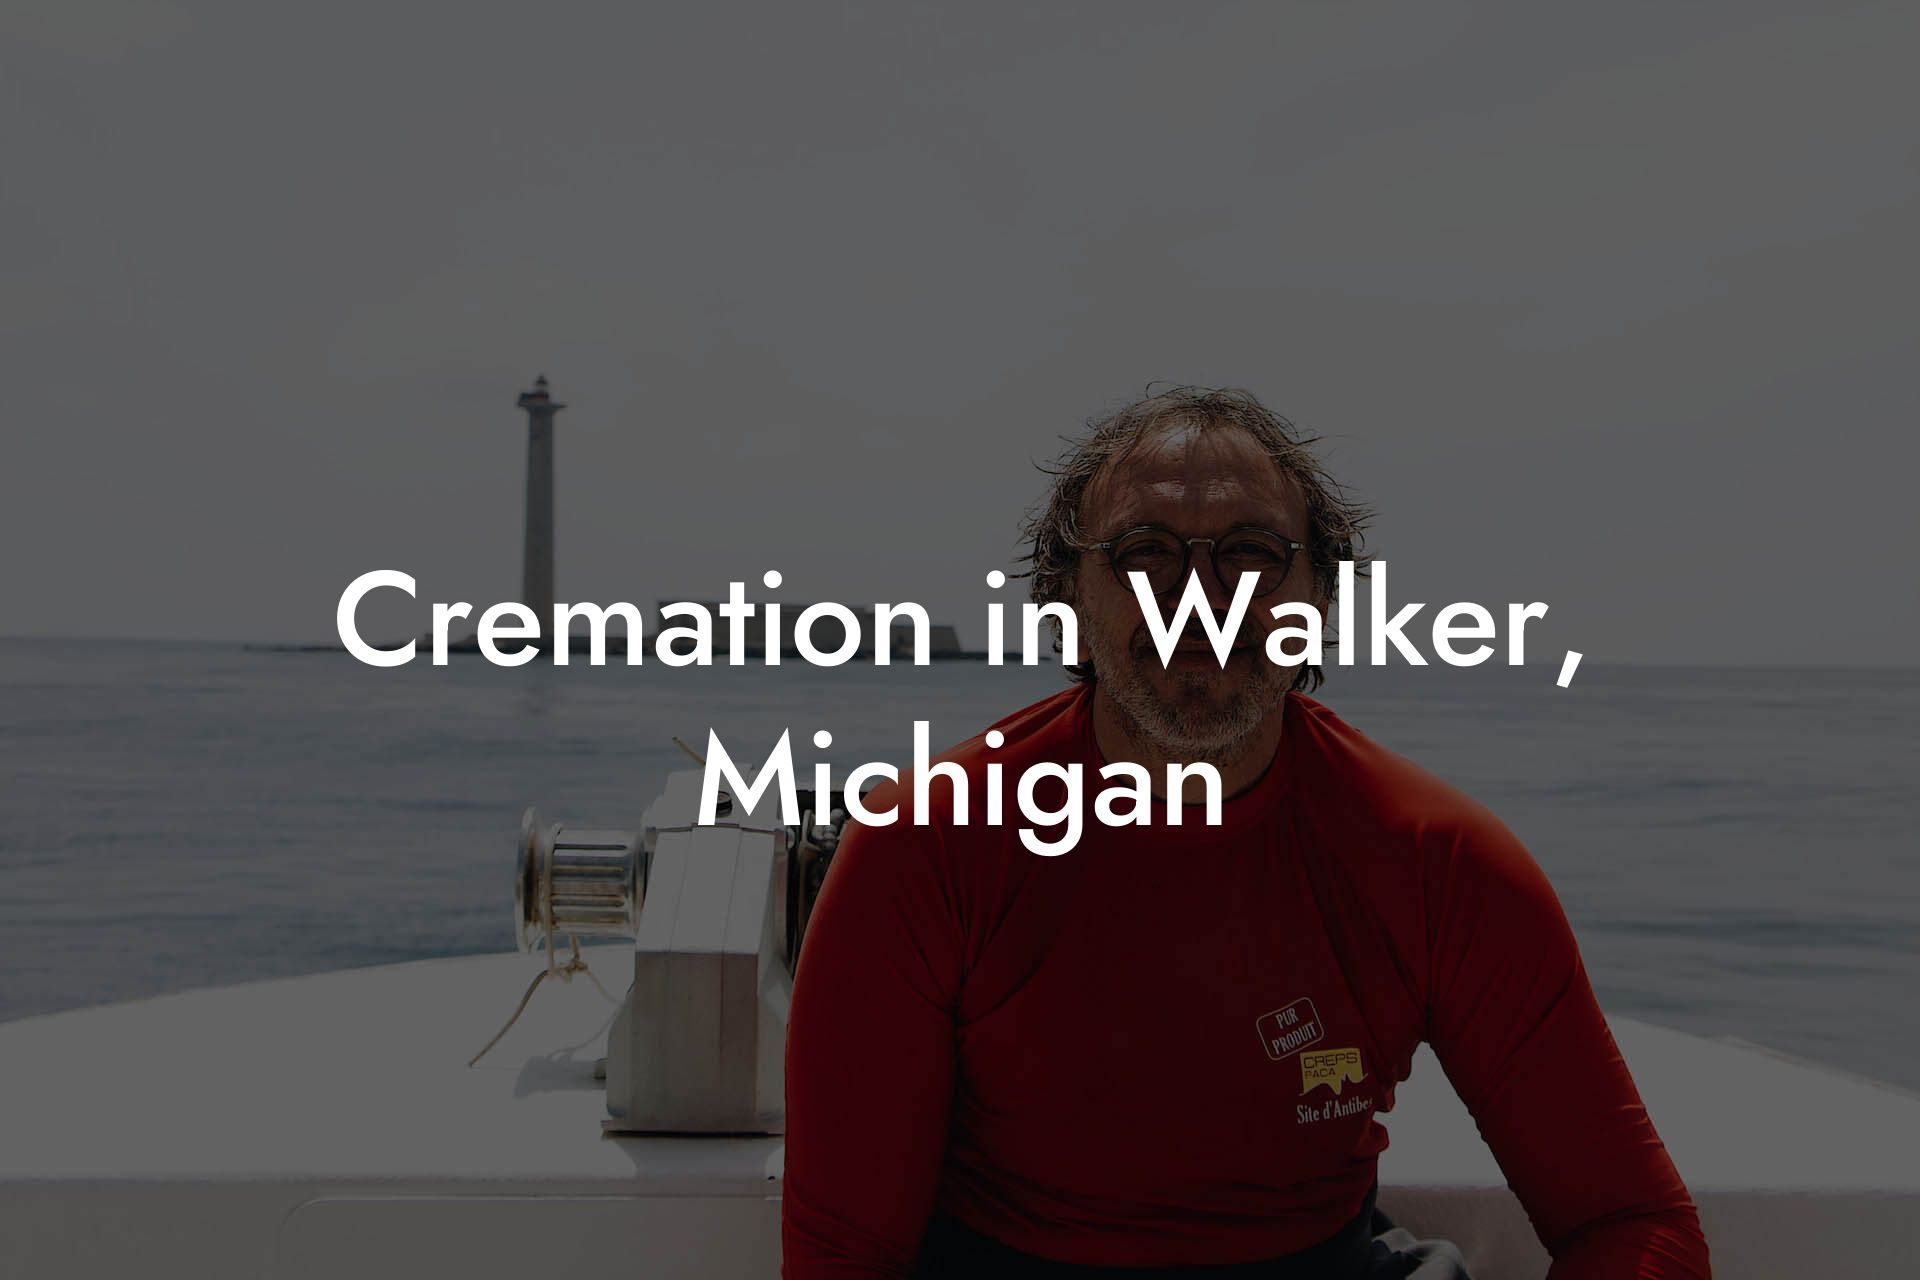 Cremation in Walker, Michigan